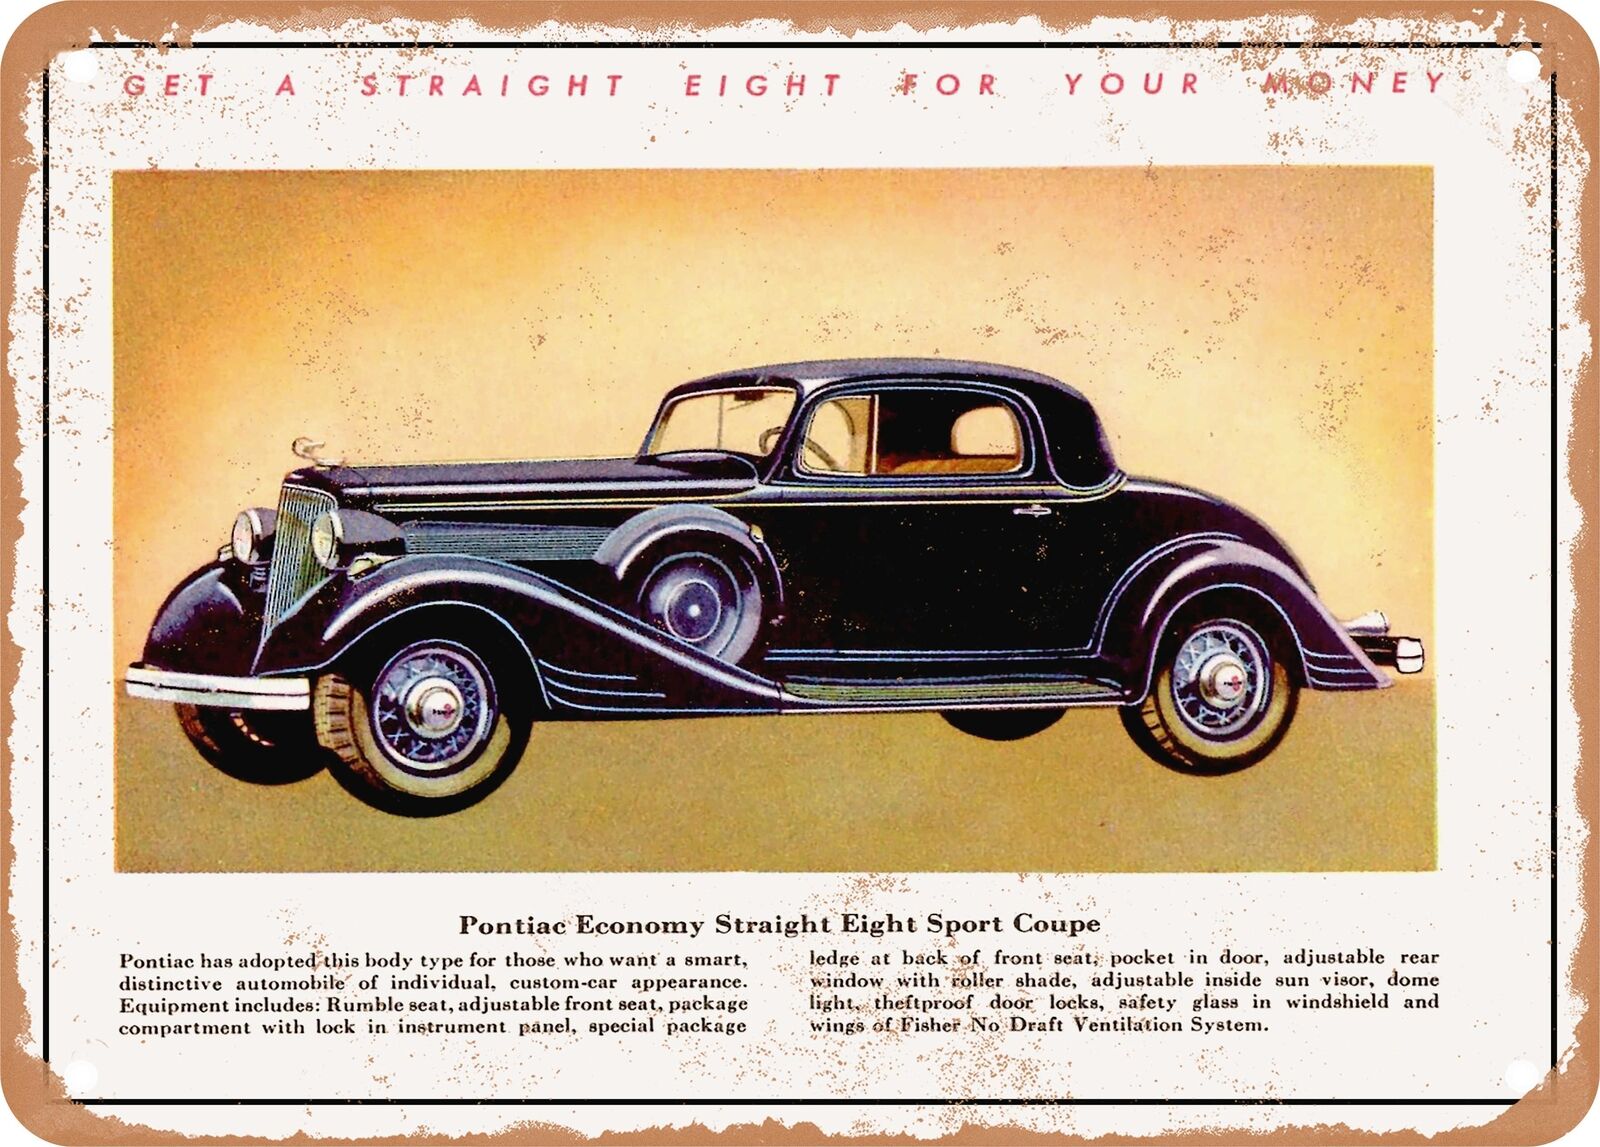 METAL SIGN - 1934 Pontiac Economy Straight Eight Sport Coupe Vintage Ad